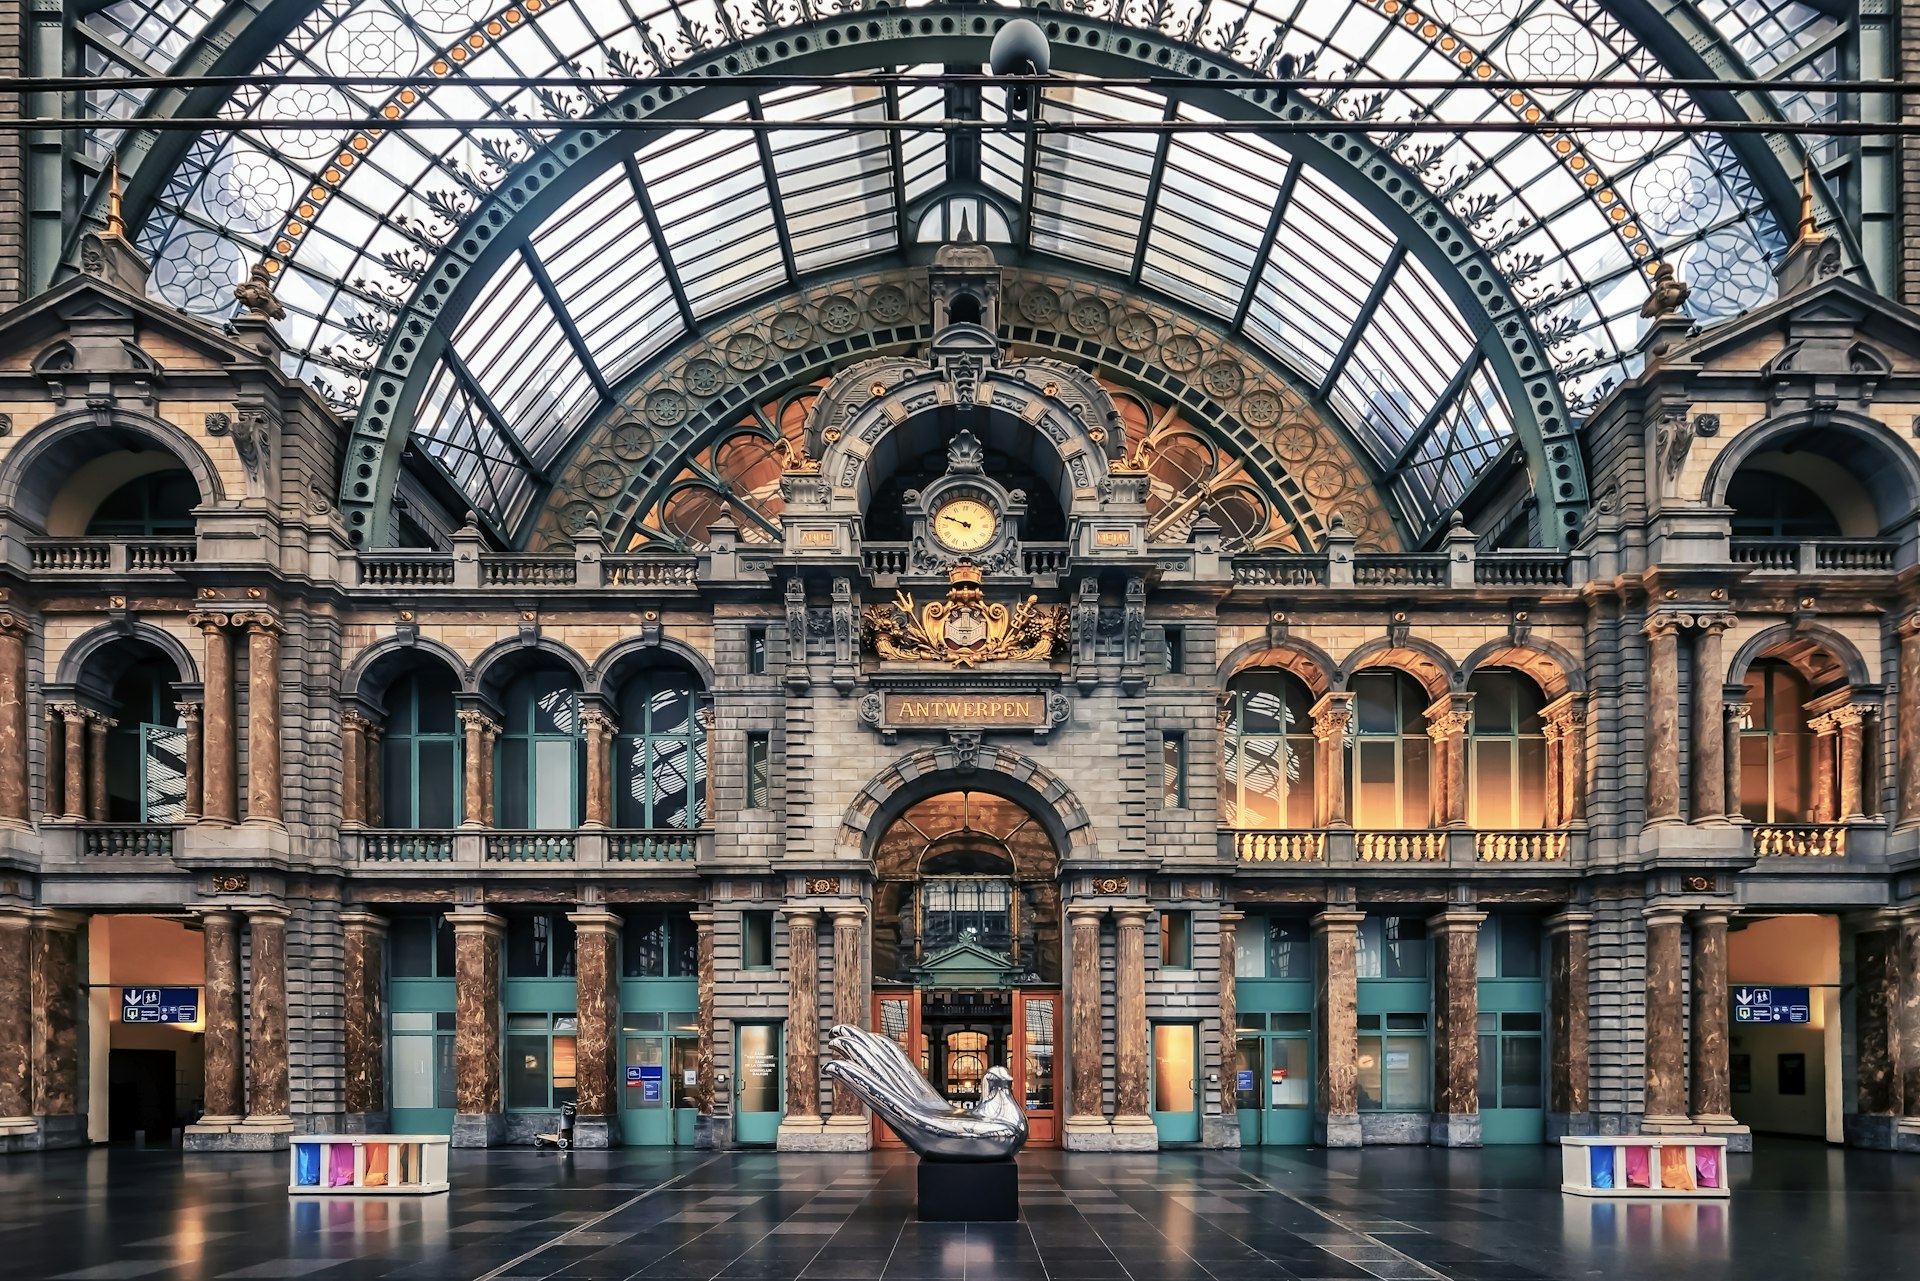 The train station in Antwerp city, Belgium